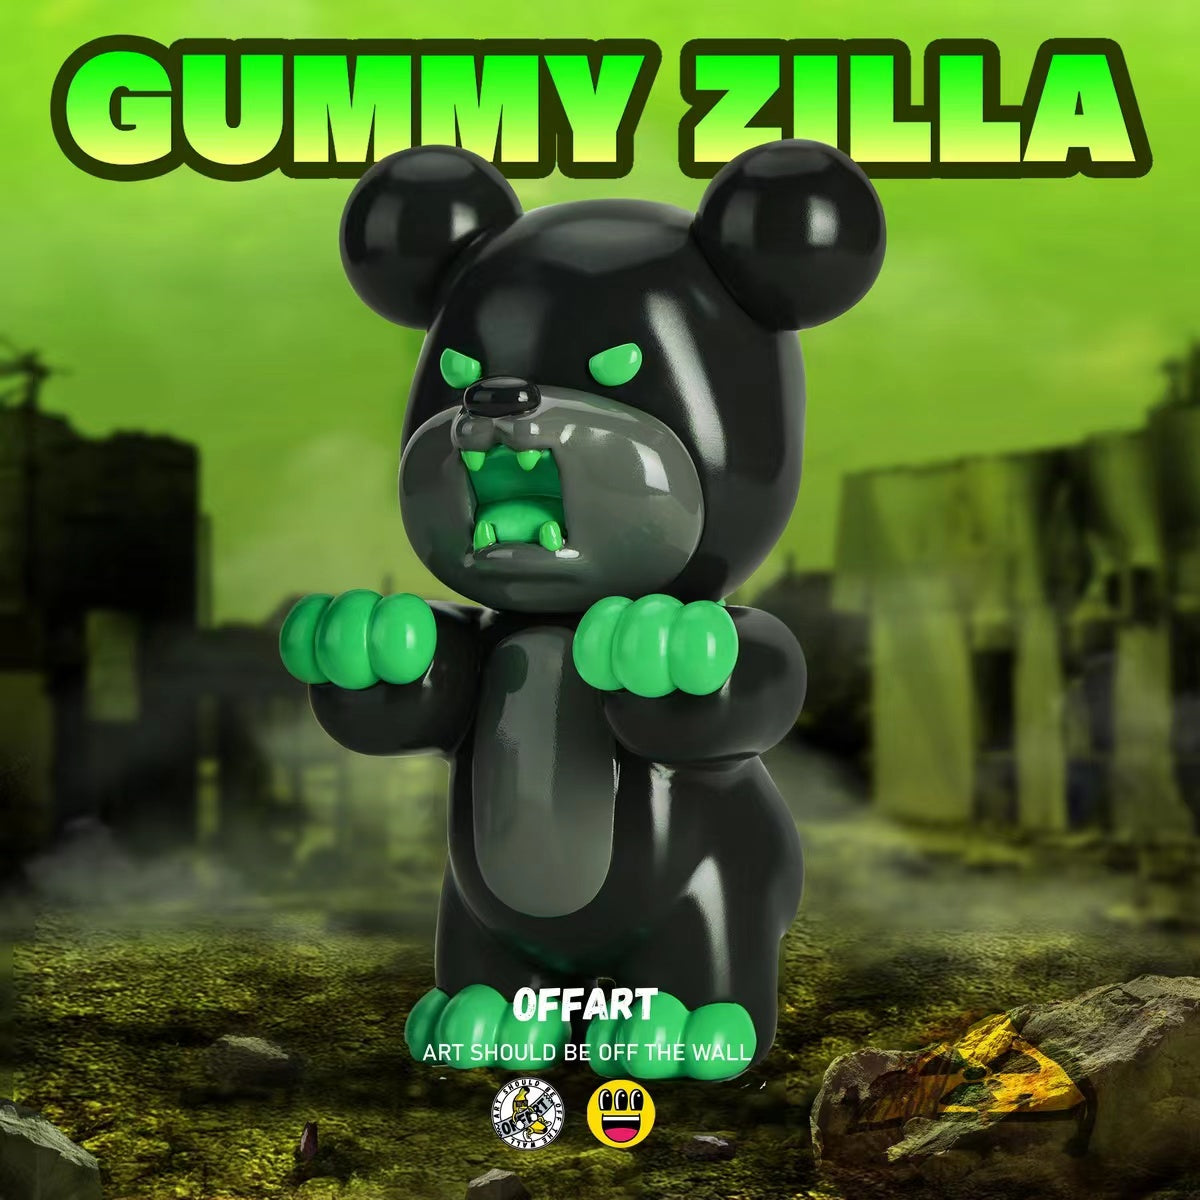 OFFART X Just Kidding - Gummy Monster Zilla vs Gummy Kong [3 Variants]